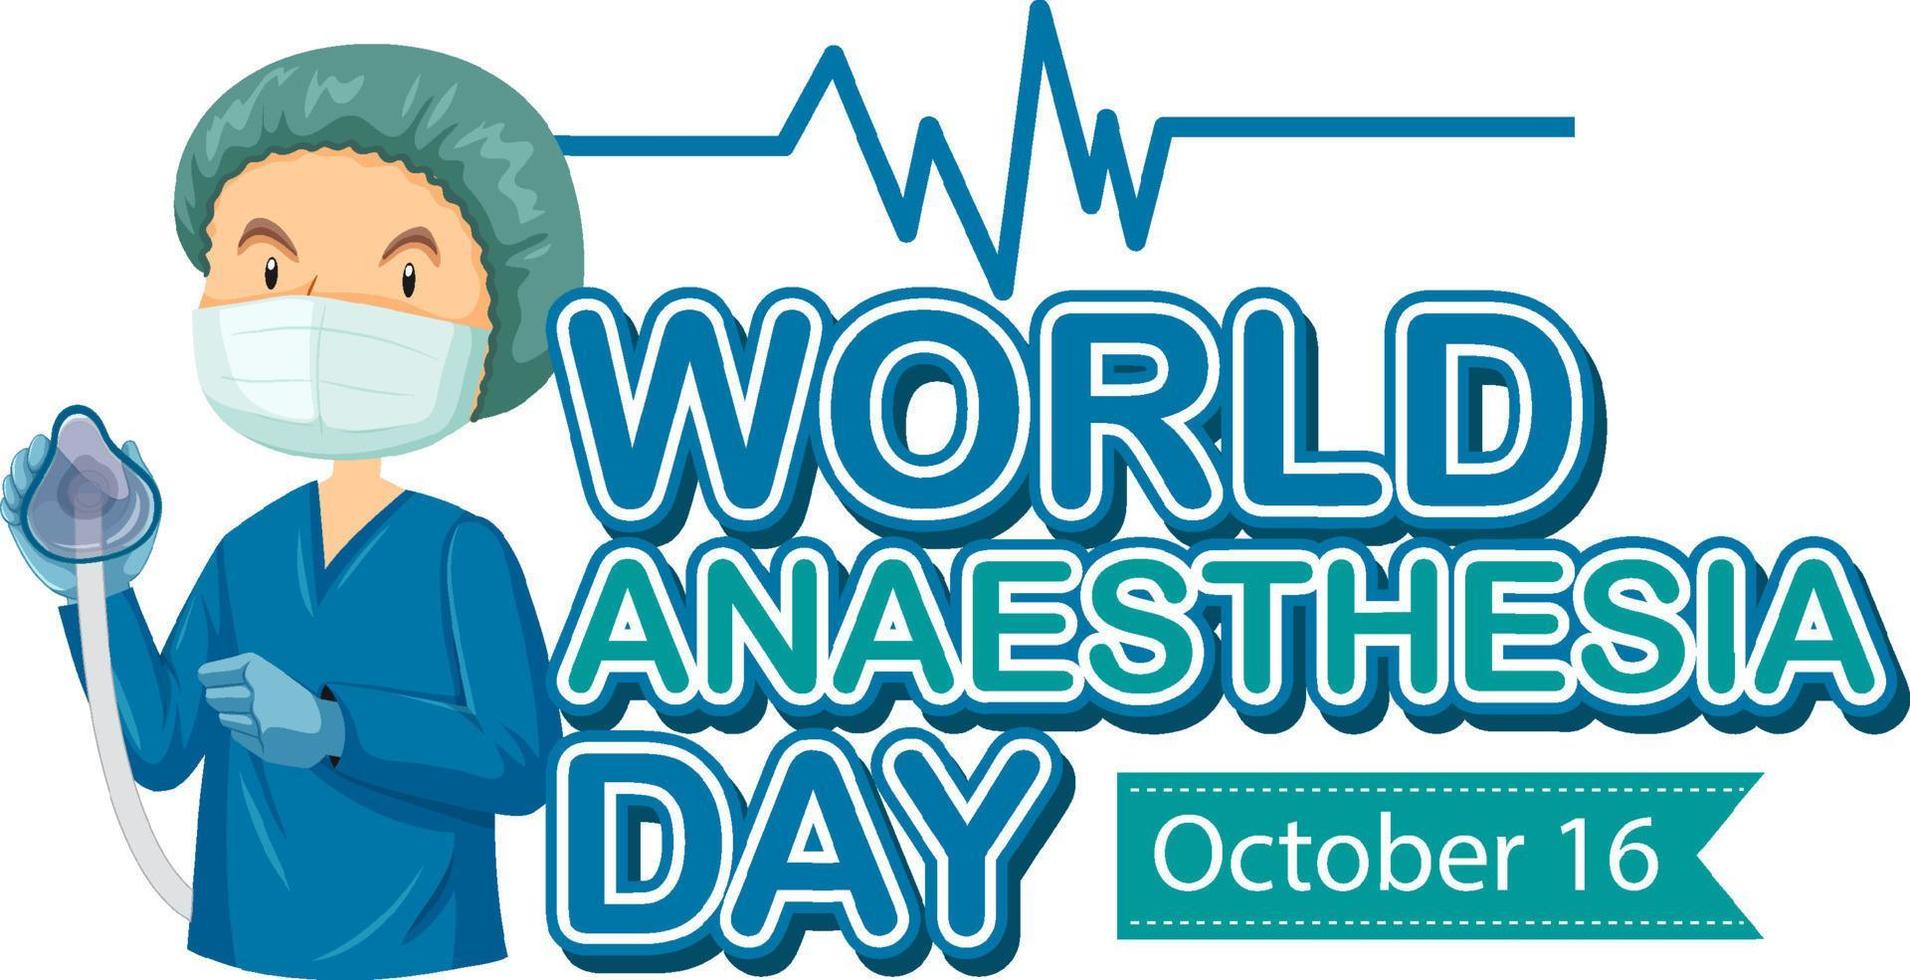 wereld anesthesie dag logo concept vector